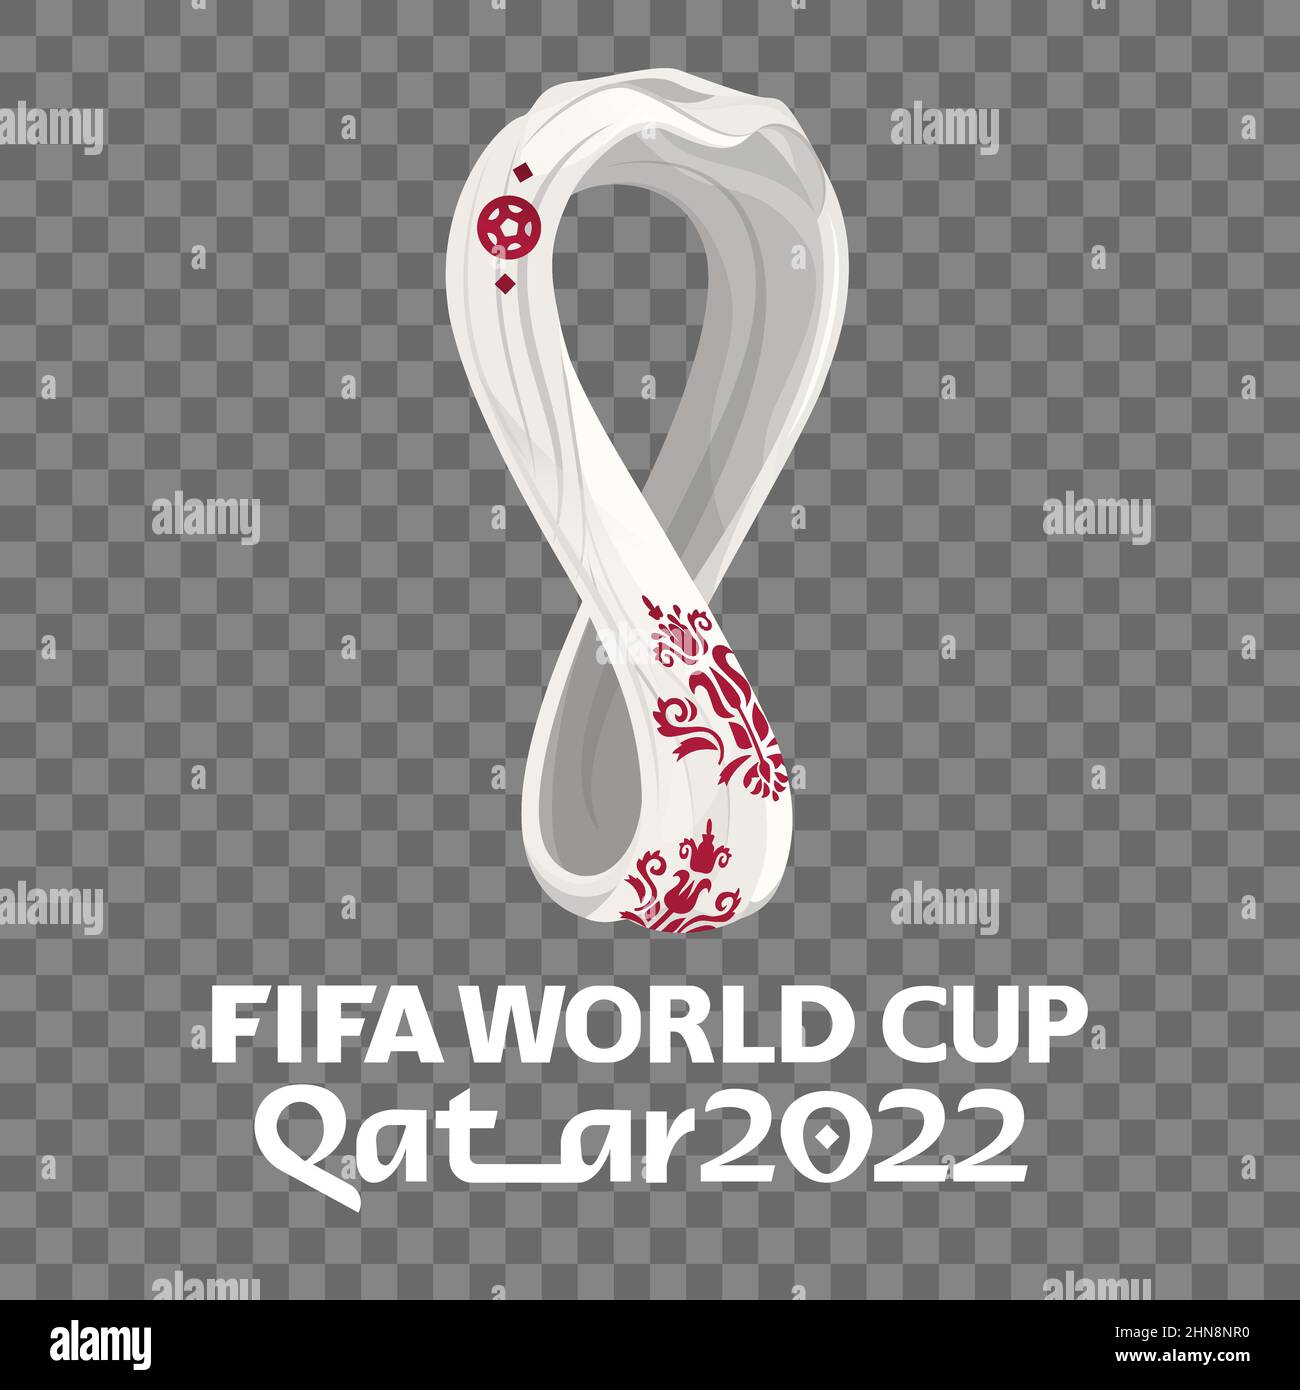 Vinnytsia, Ukraine - February 14, 2022: 2022 FIFA world cup logo. Editorial Illustration isolated on transparent background Stock Vector